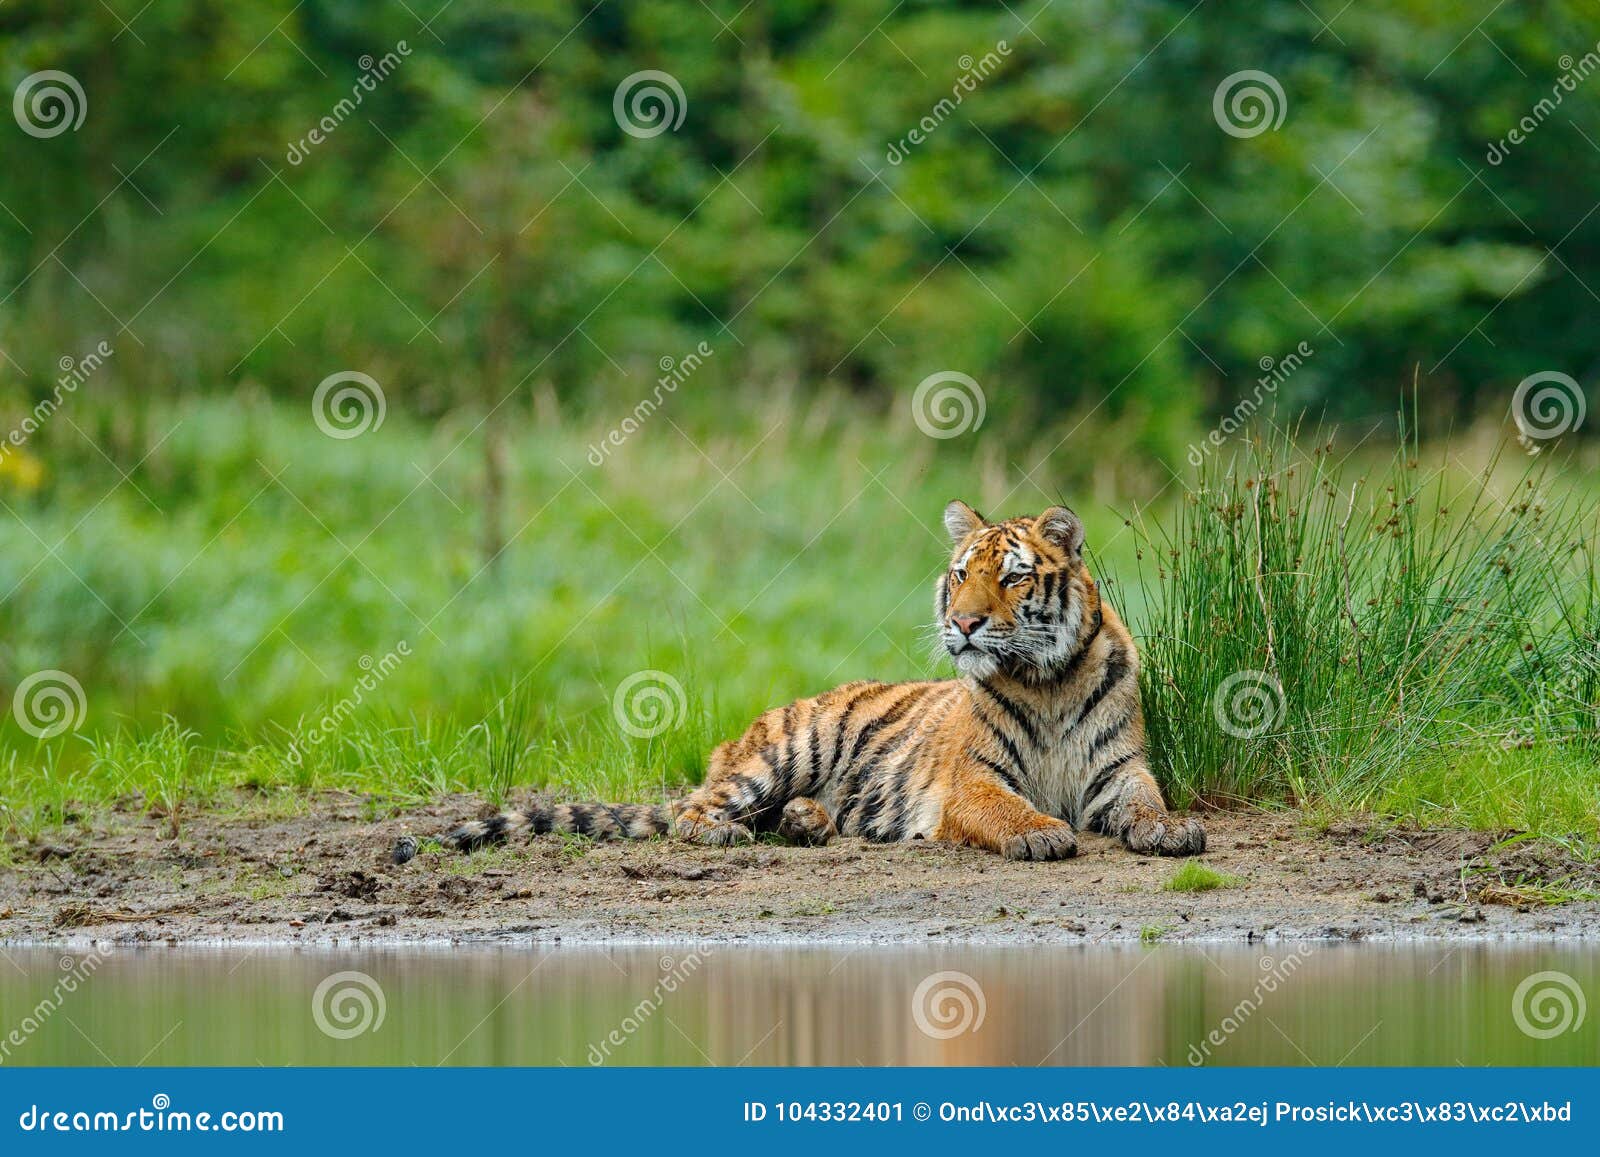 amur tiger lying near lake water. danger animal, tajga, russia. animal in green forest stream. grey stone, river droplet. siberian